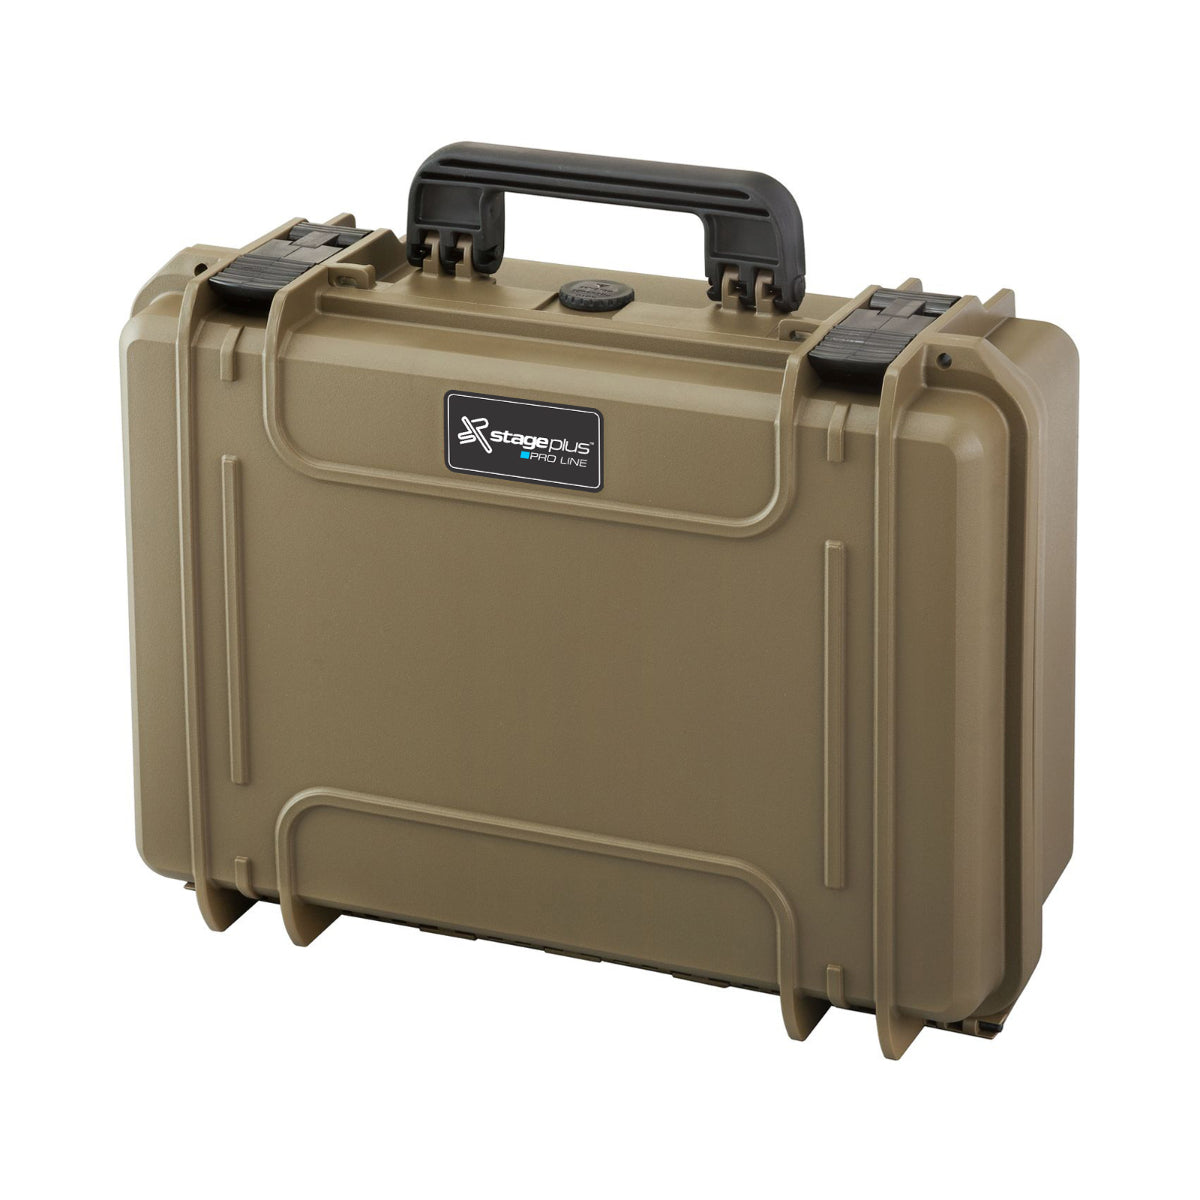 SP PRO 430 Sahara Carry Case, Empty, ID: L426xW290xH159mm